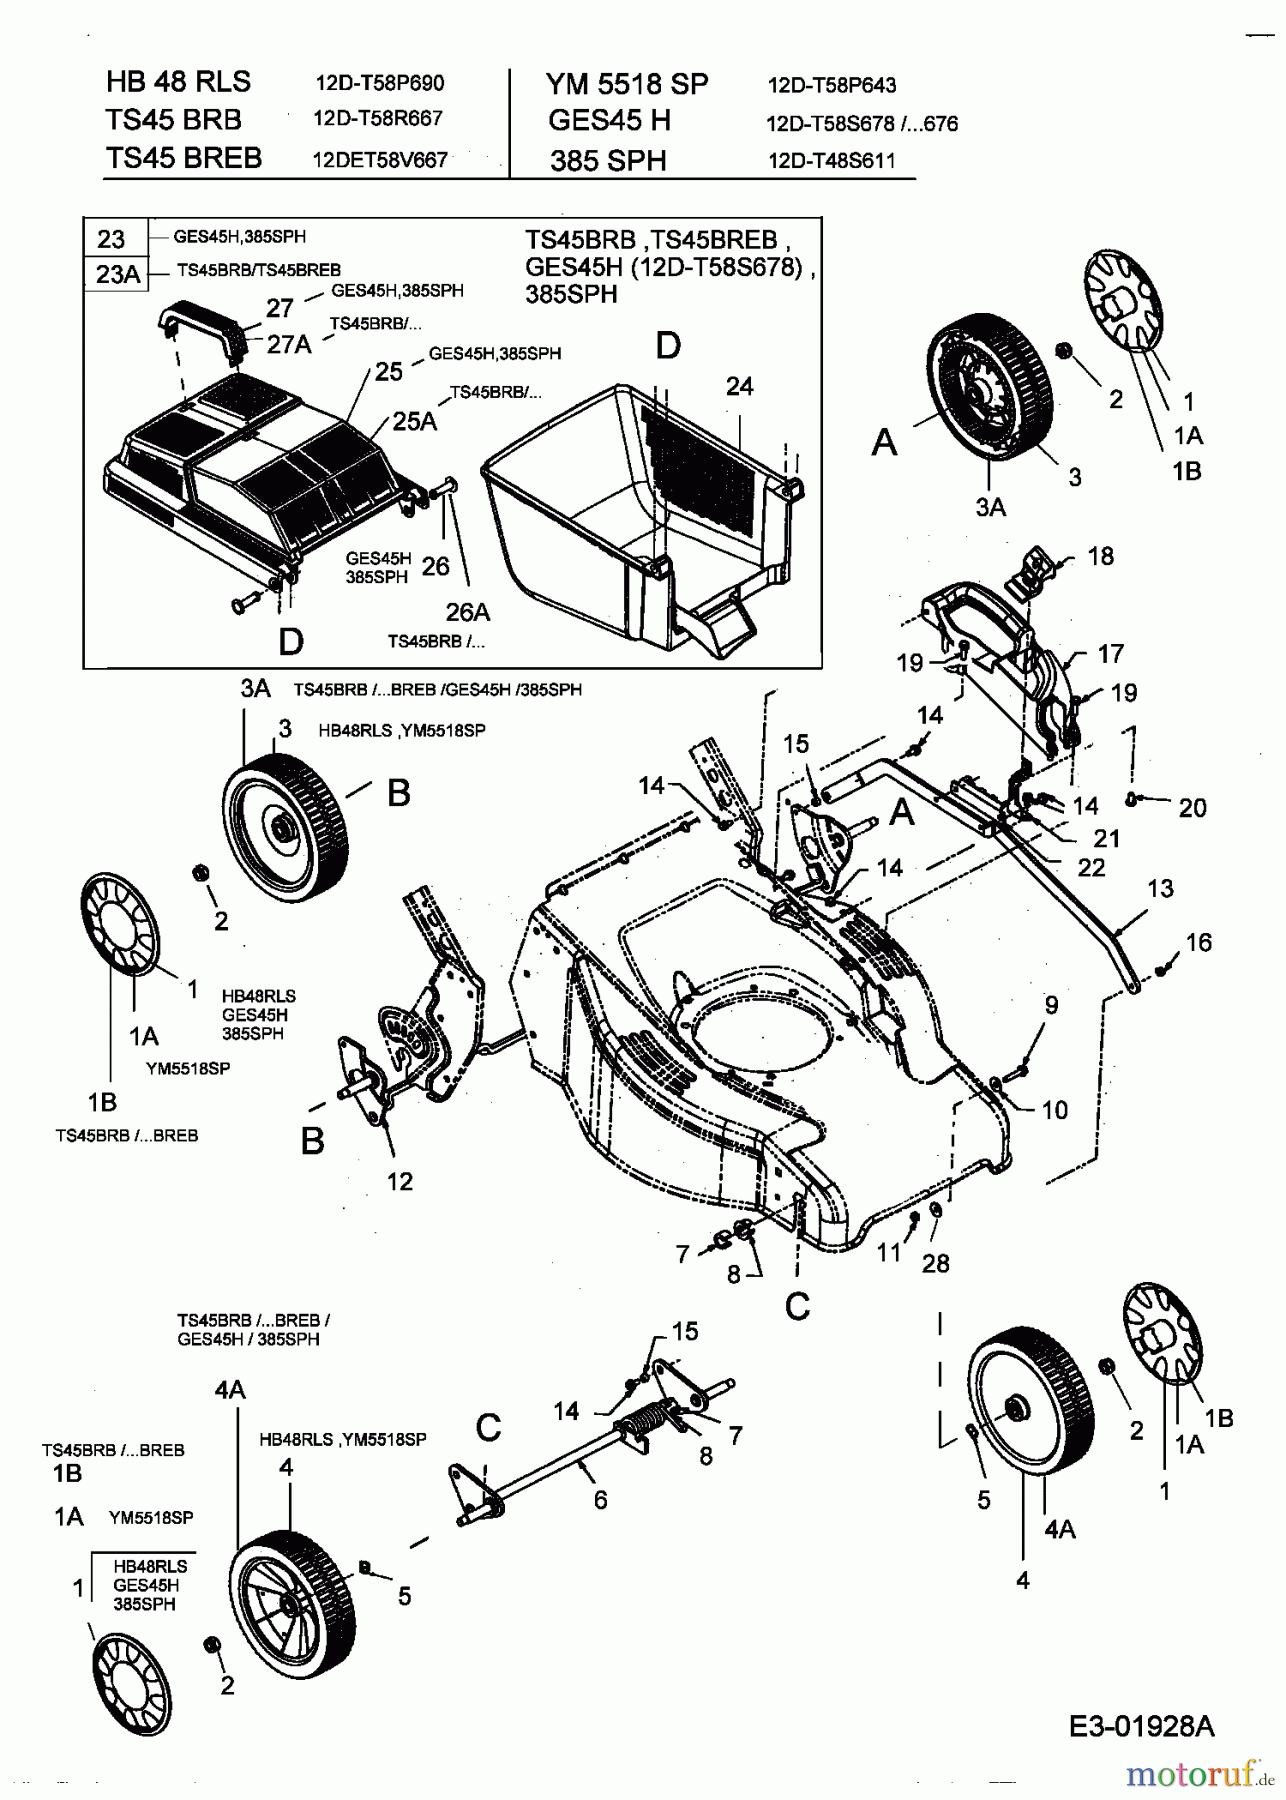  Turbo Silent Petrol mower self propelled TS 45 BRE-B 12DET58V667  (2004) Grass box, Wheels, Cutting hight adjustment